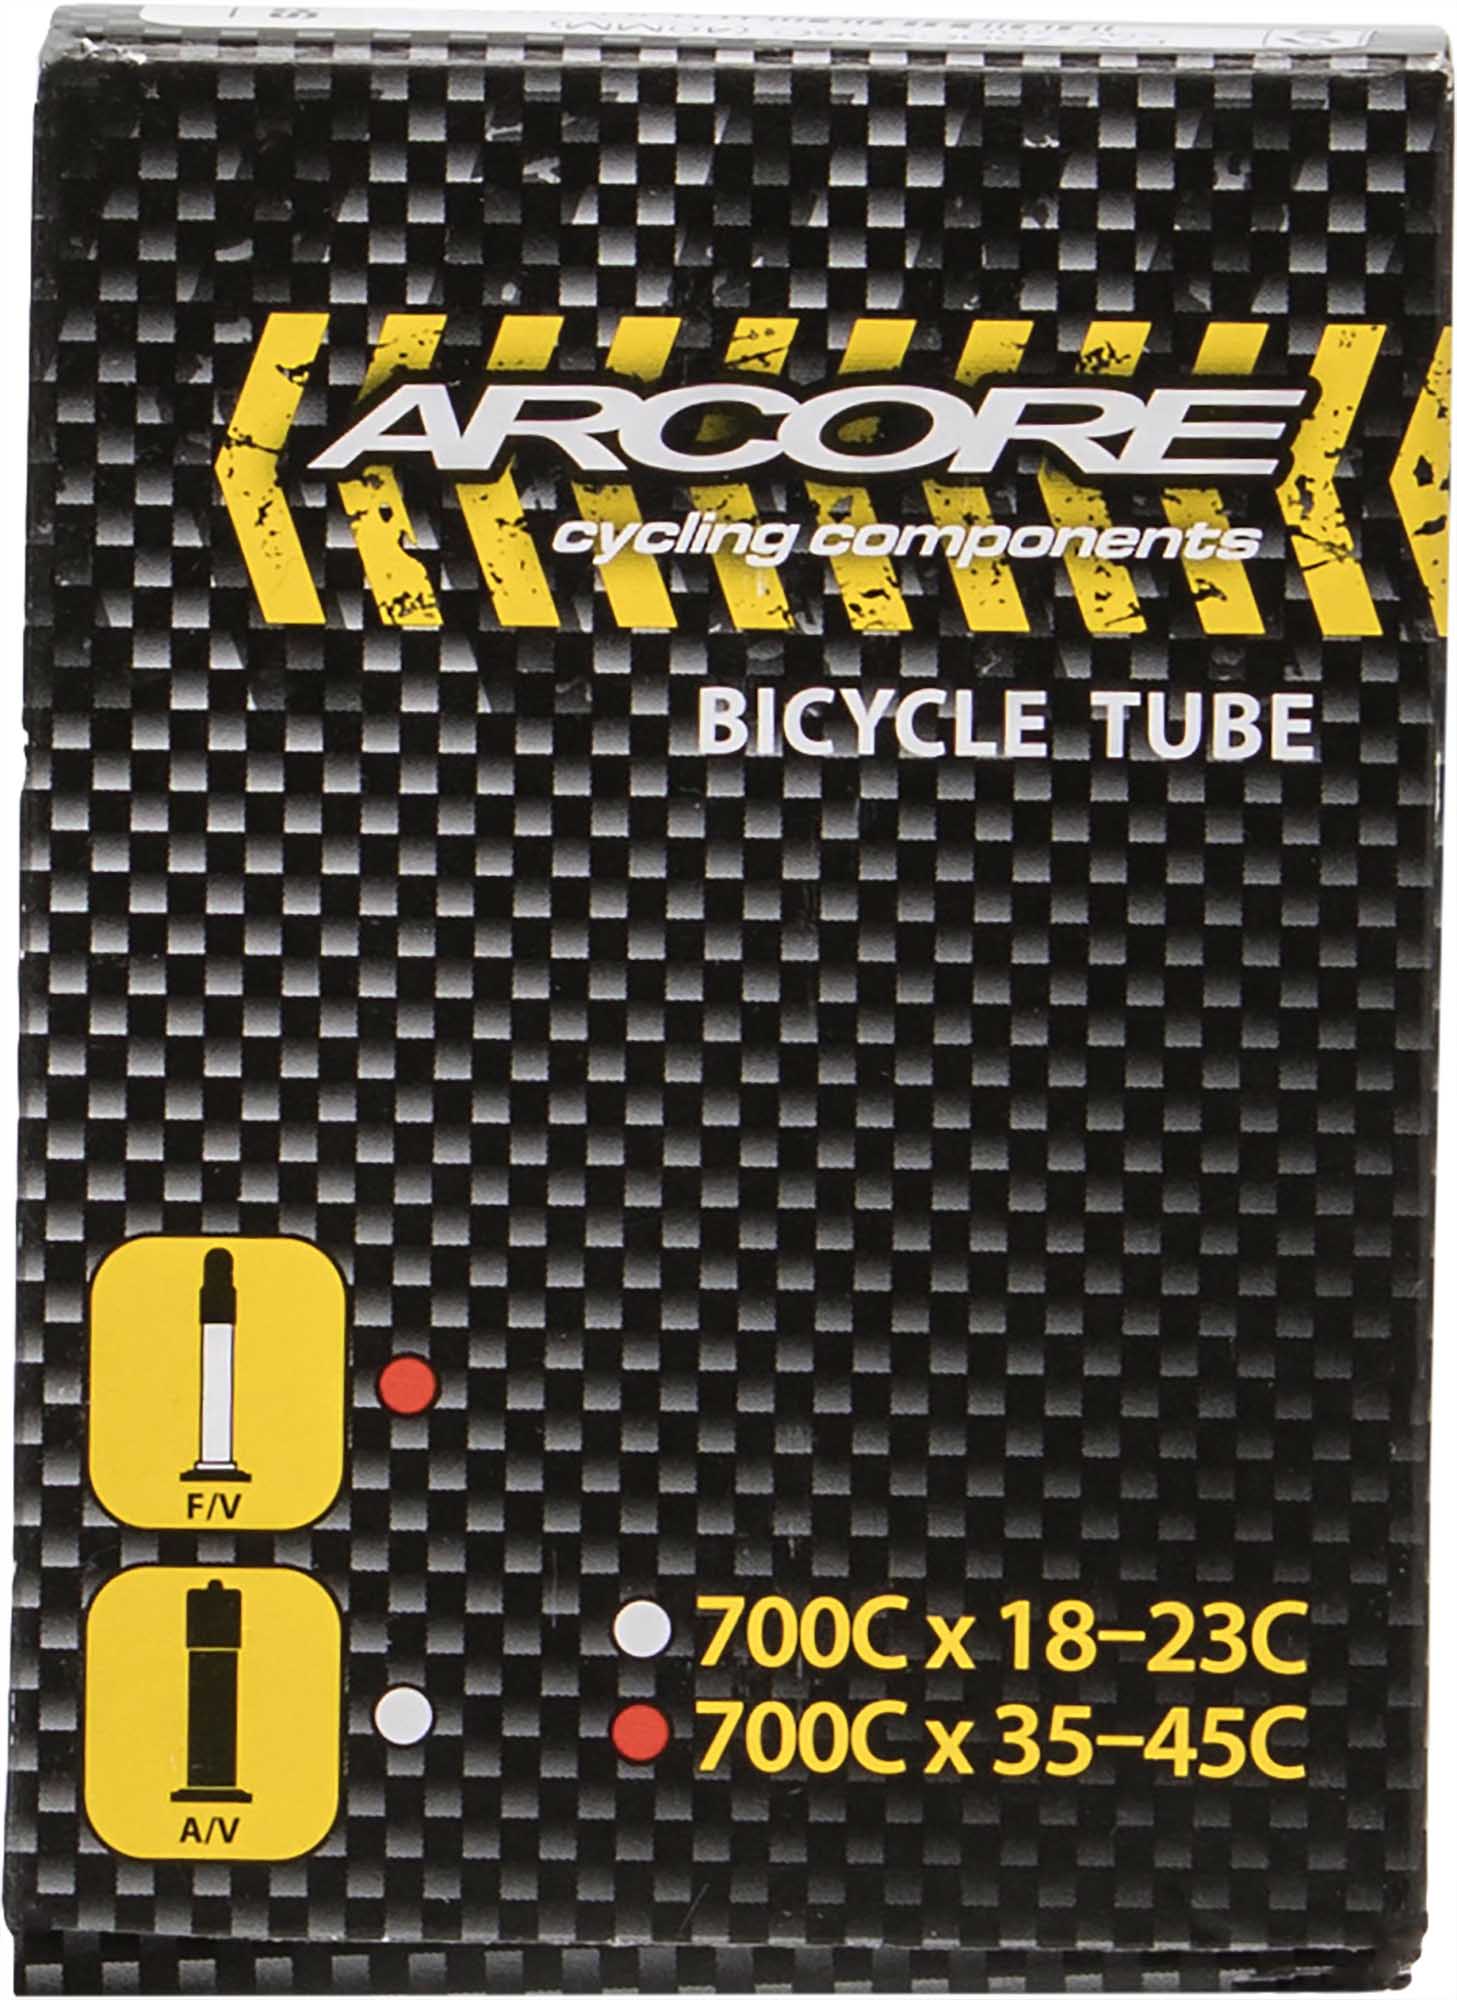 Bicycle tube